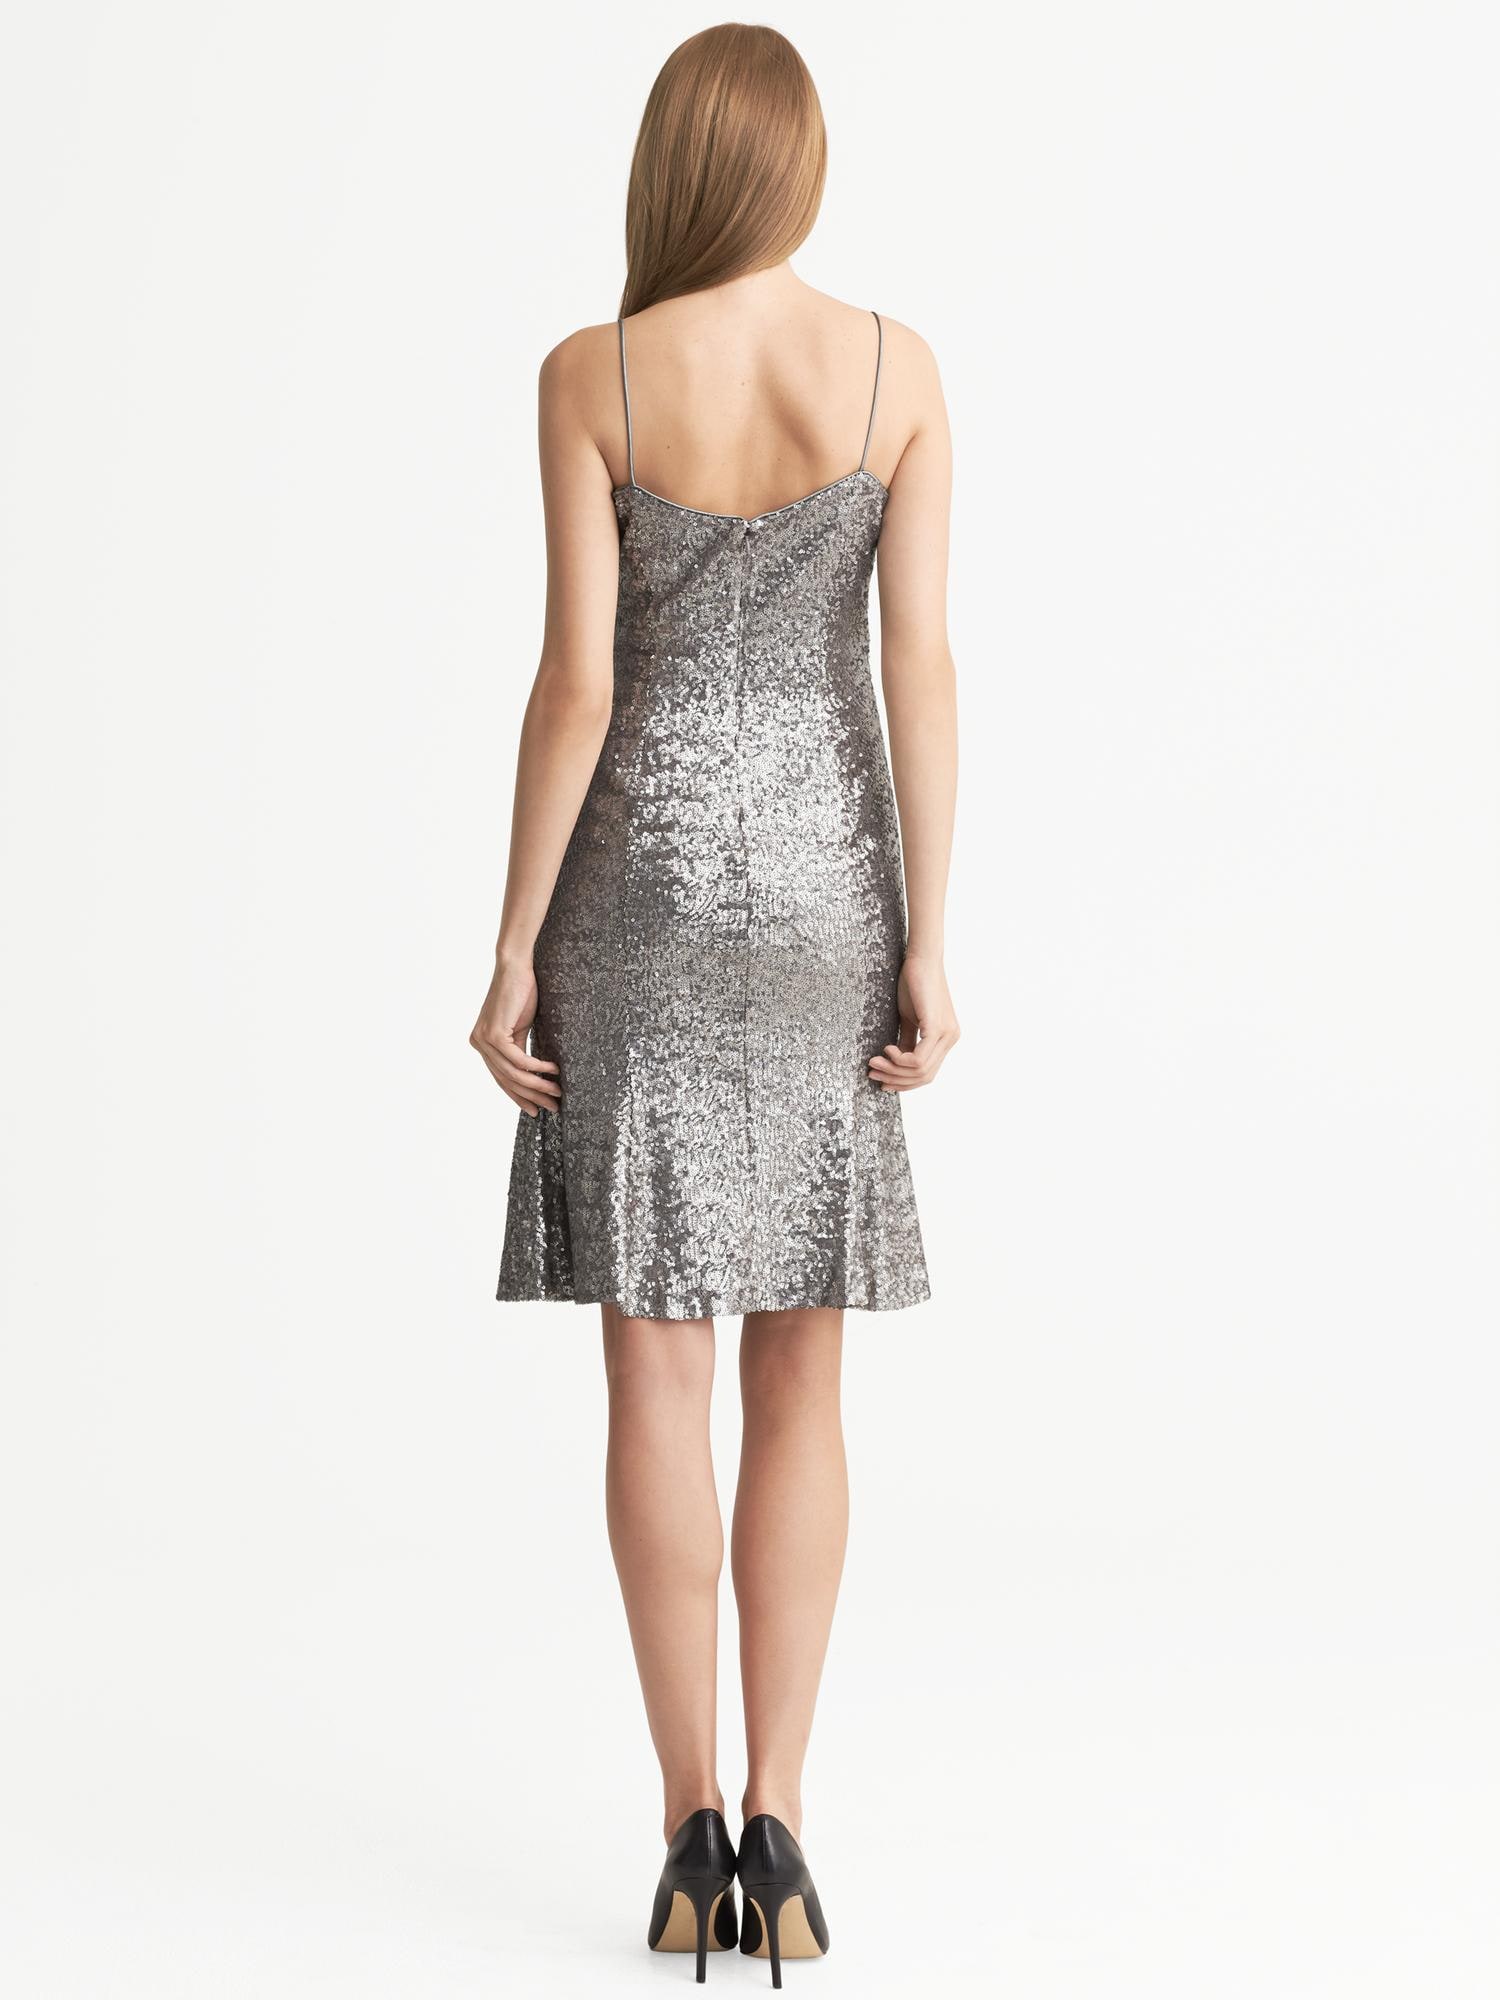 L'Wren Scott Collection Sequin Wiggle Dress